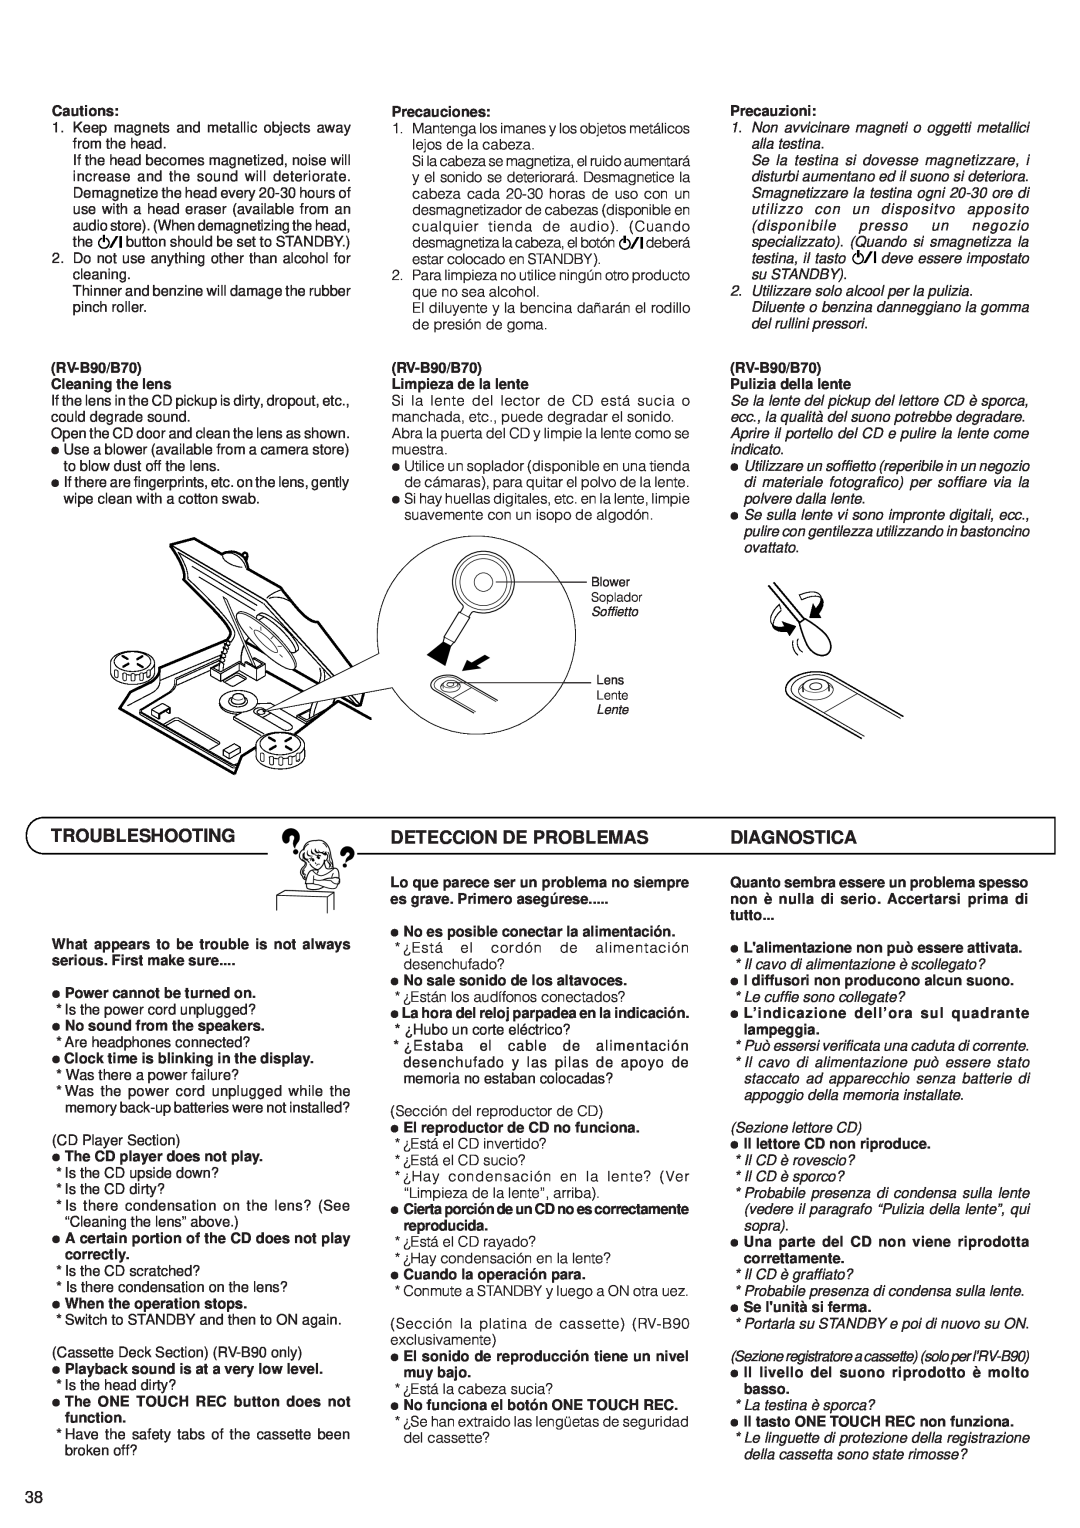 JVC RV-B70, RV-B90 manual Troubleshooting, Deteccion De Problemas, Diagnostica 